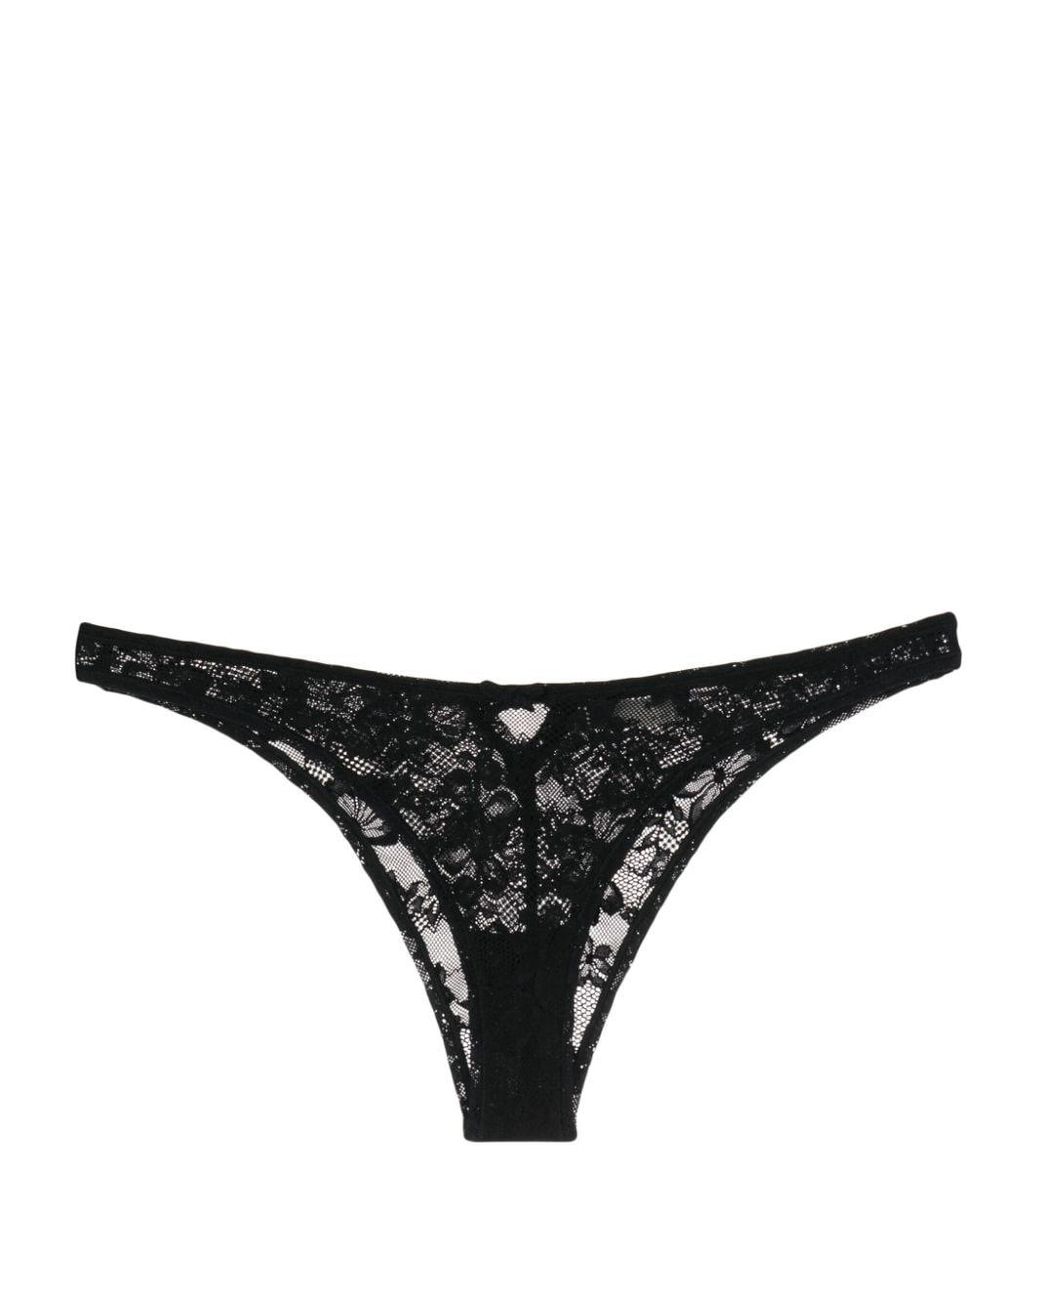 Charlotte Lace Seamless Cheeky Underwear - FLEUR DU MAL